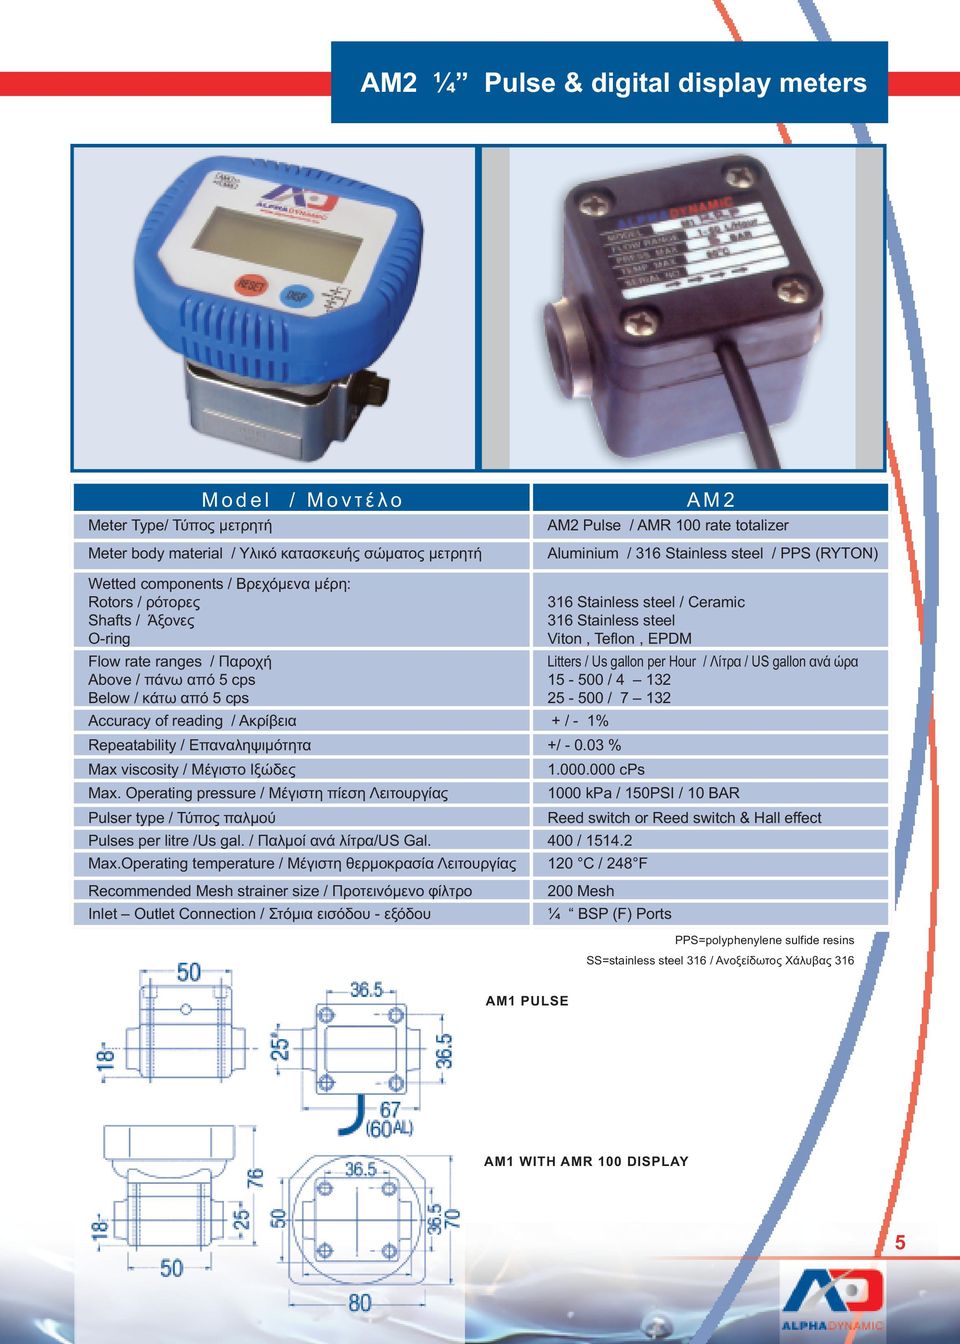 Operating pressure / Μέγιστη πίεση Λειτουργίας 1000 kpa / 150PSI / 10 BAR Pulser type / Τύπος παλµού Reed switch or Reed switch & Hall effect Pulses per litre /Us gal.